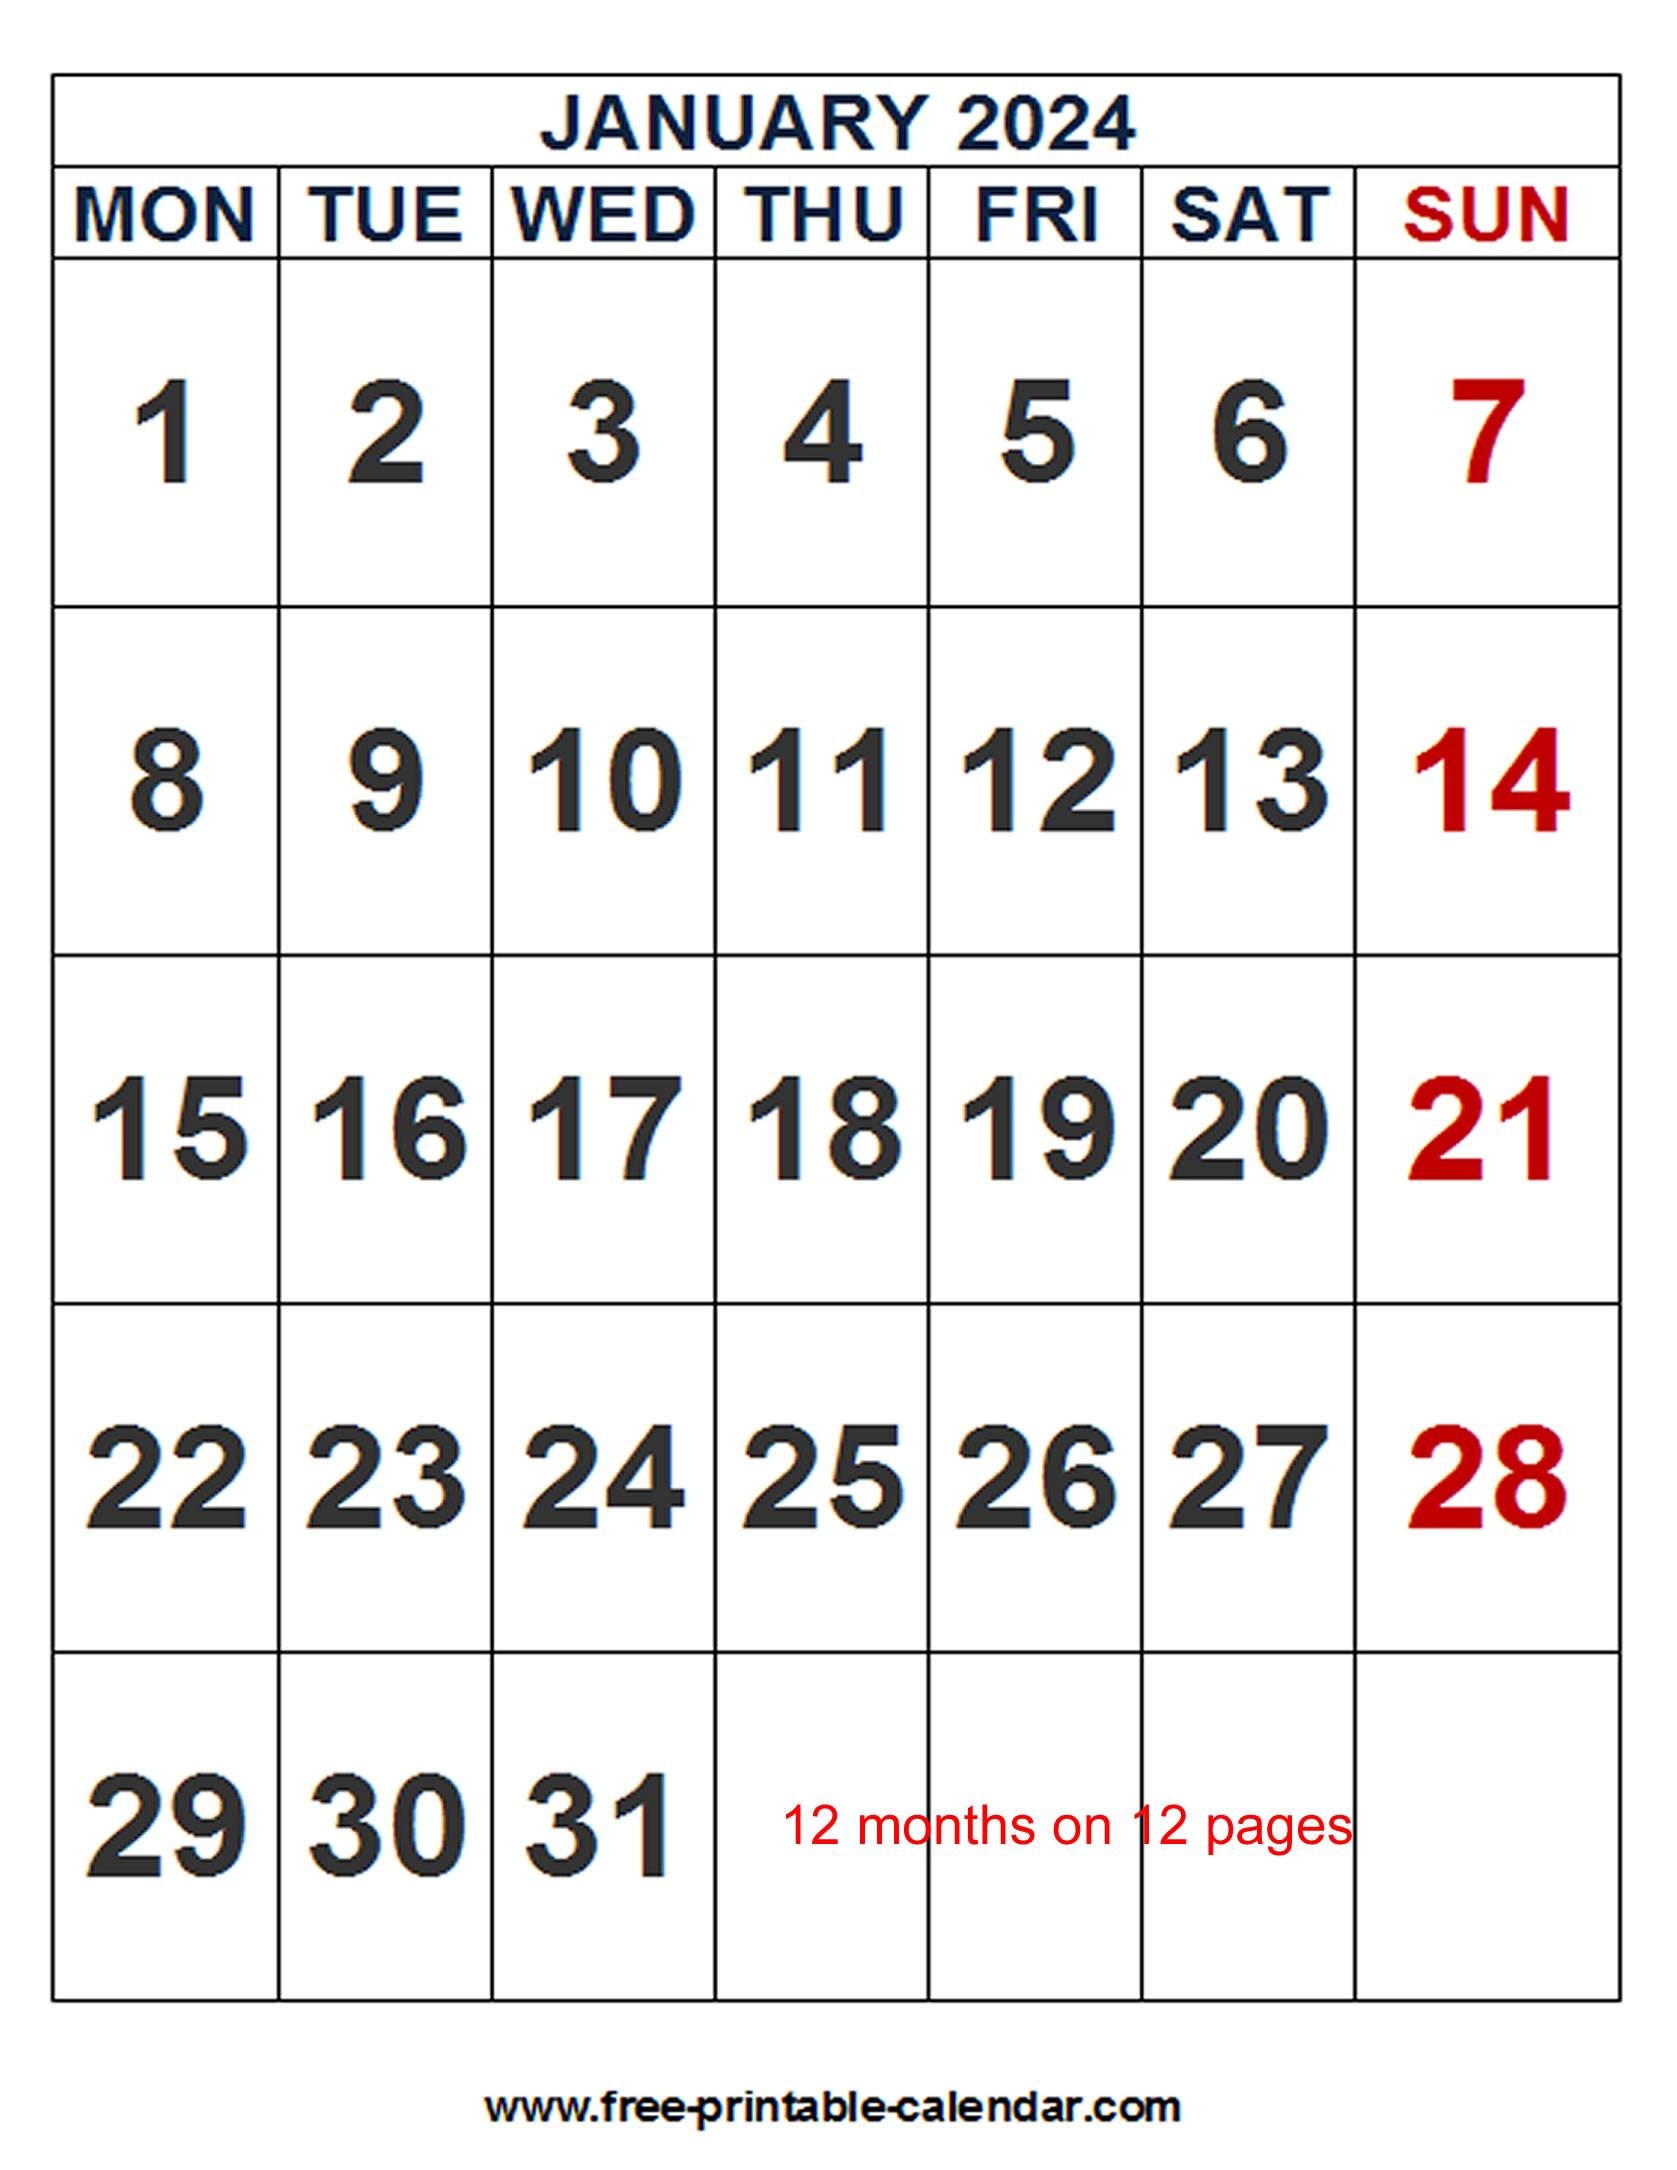 2024 Calendar Word Template - Free-Printable-Calendar throughout Free Printable Calendar 2024 Template